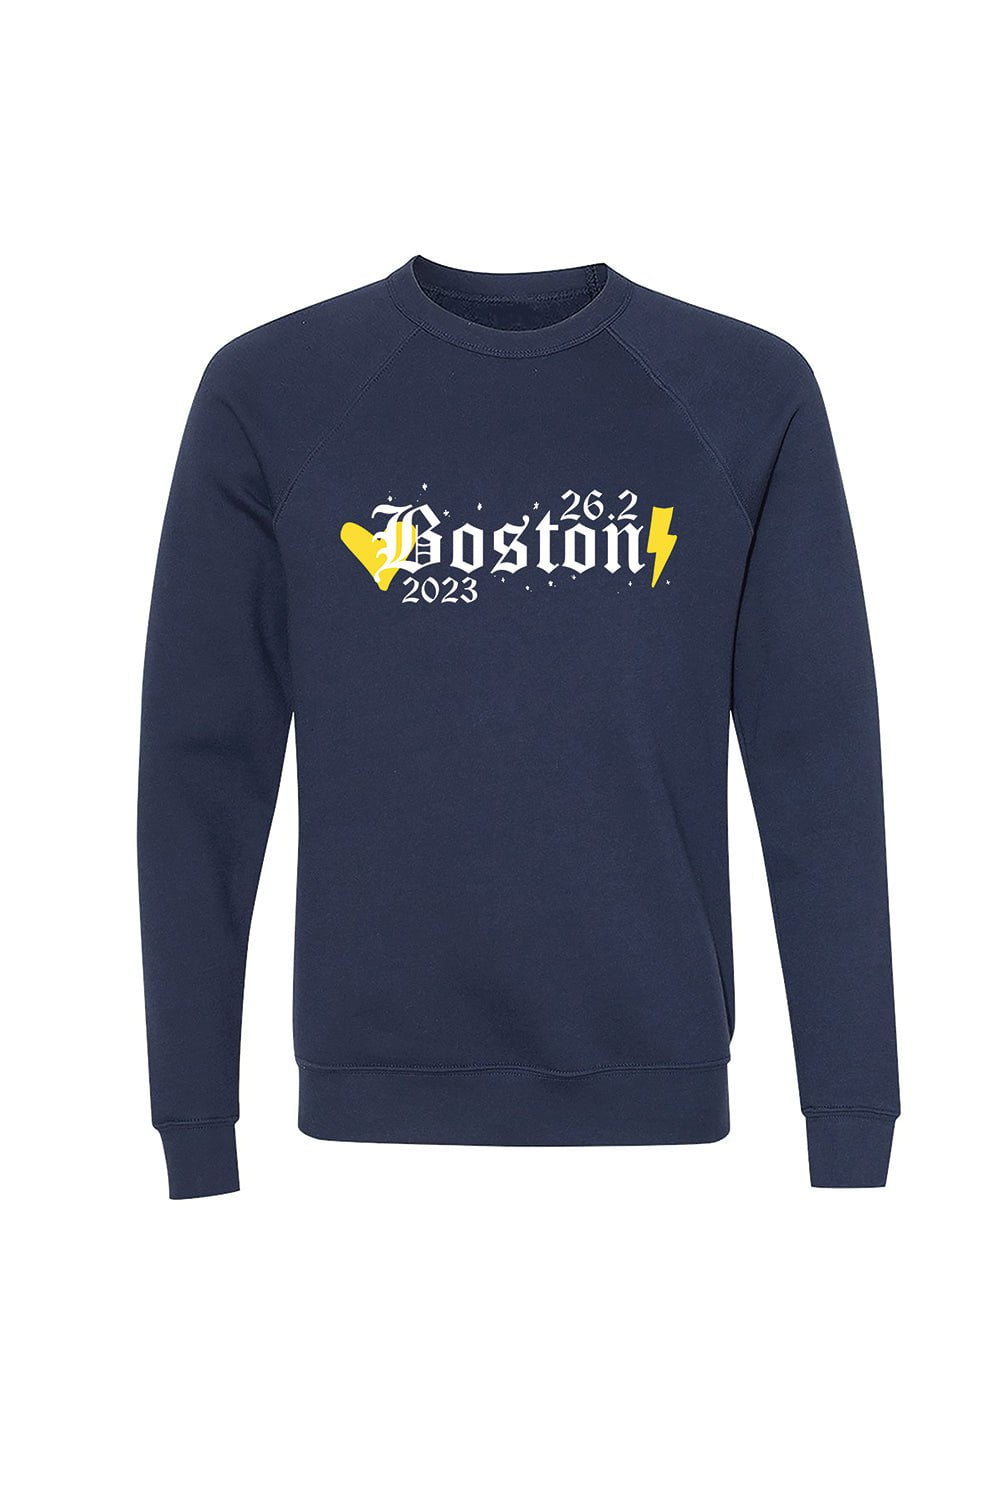 Boston marathon merchandise